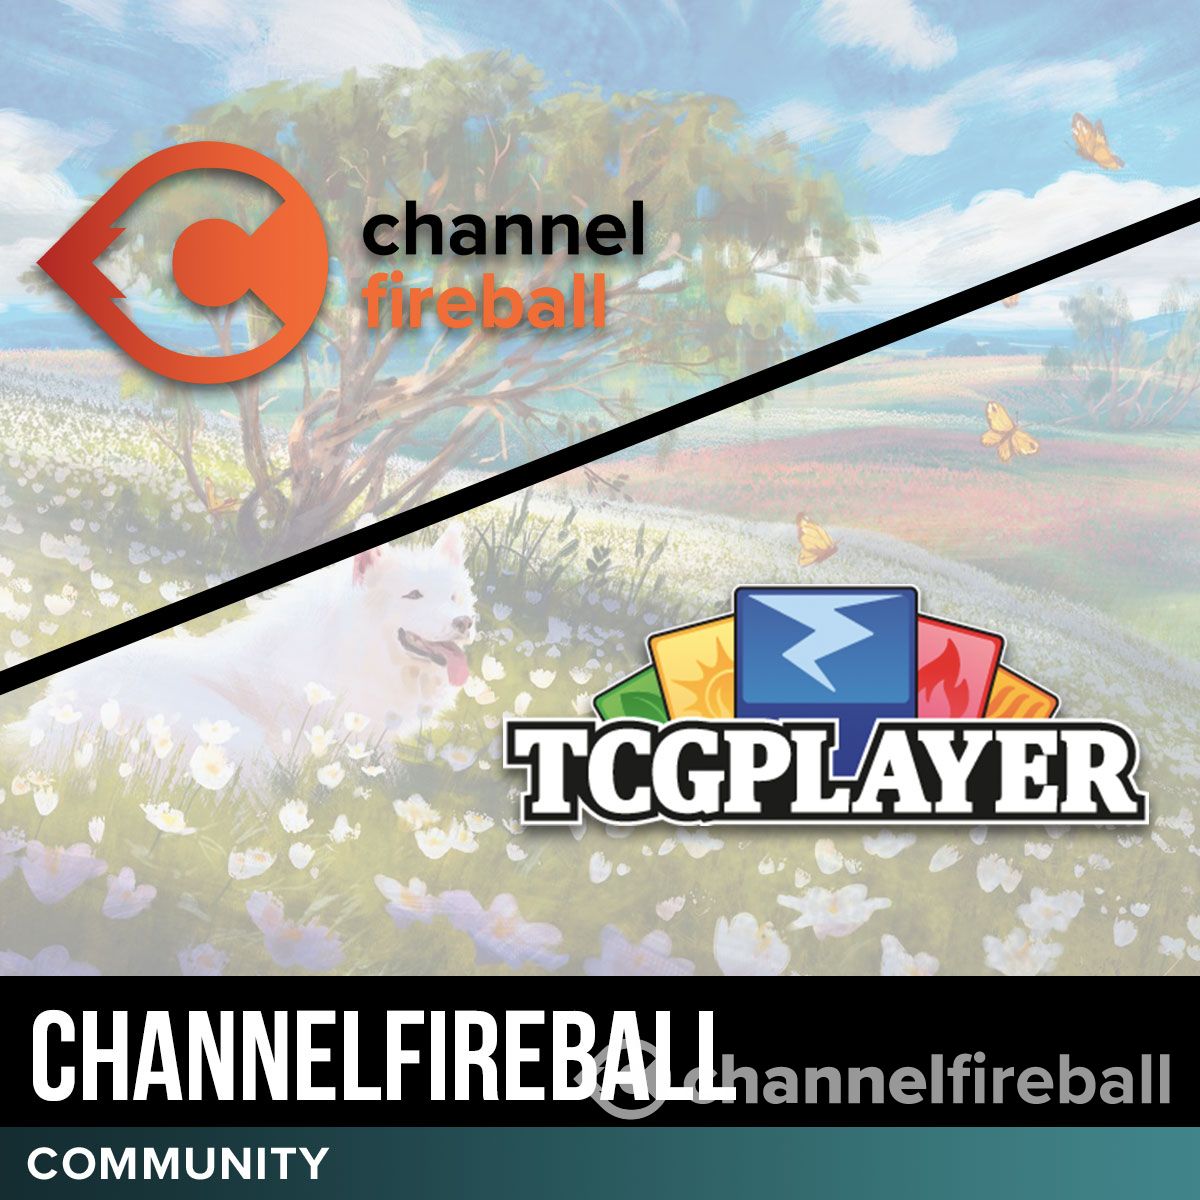 TCGplayer Will Acquire ChannelFireball, BinderPOS - Star City Games